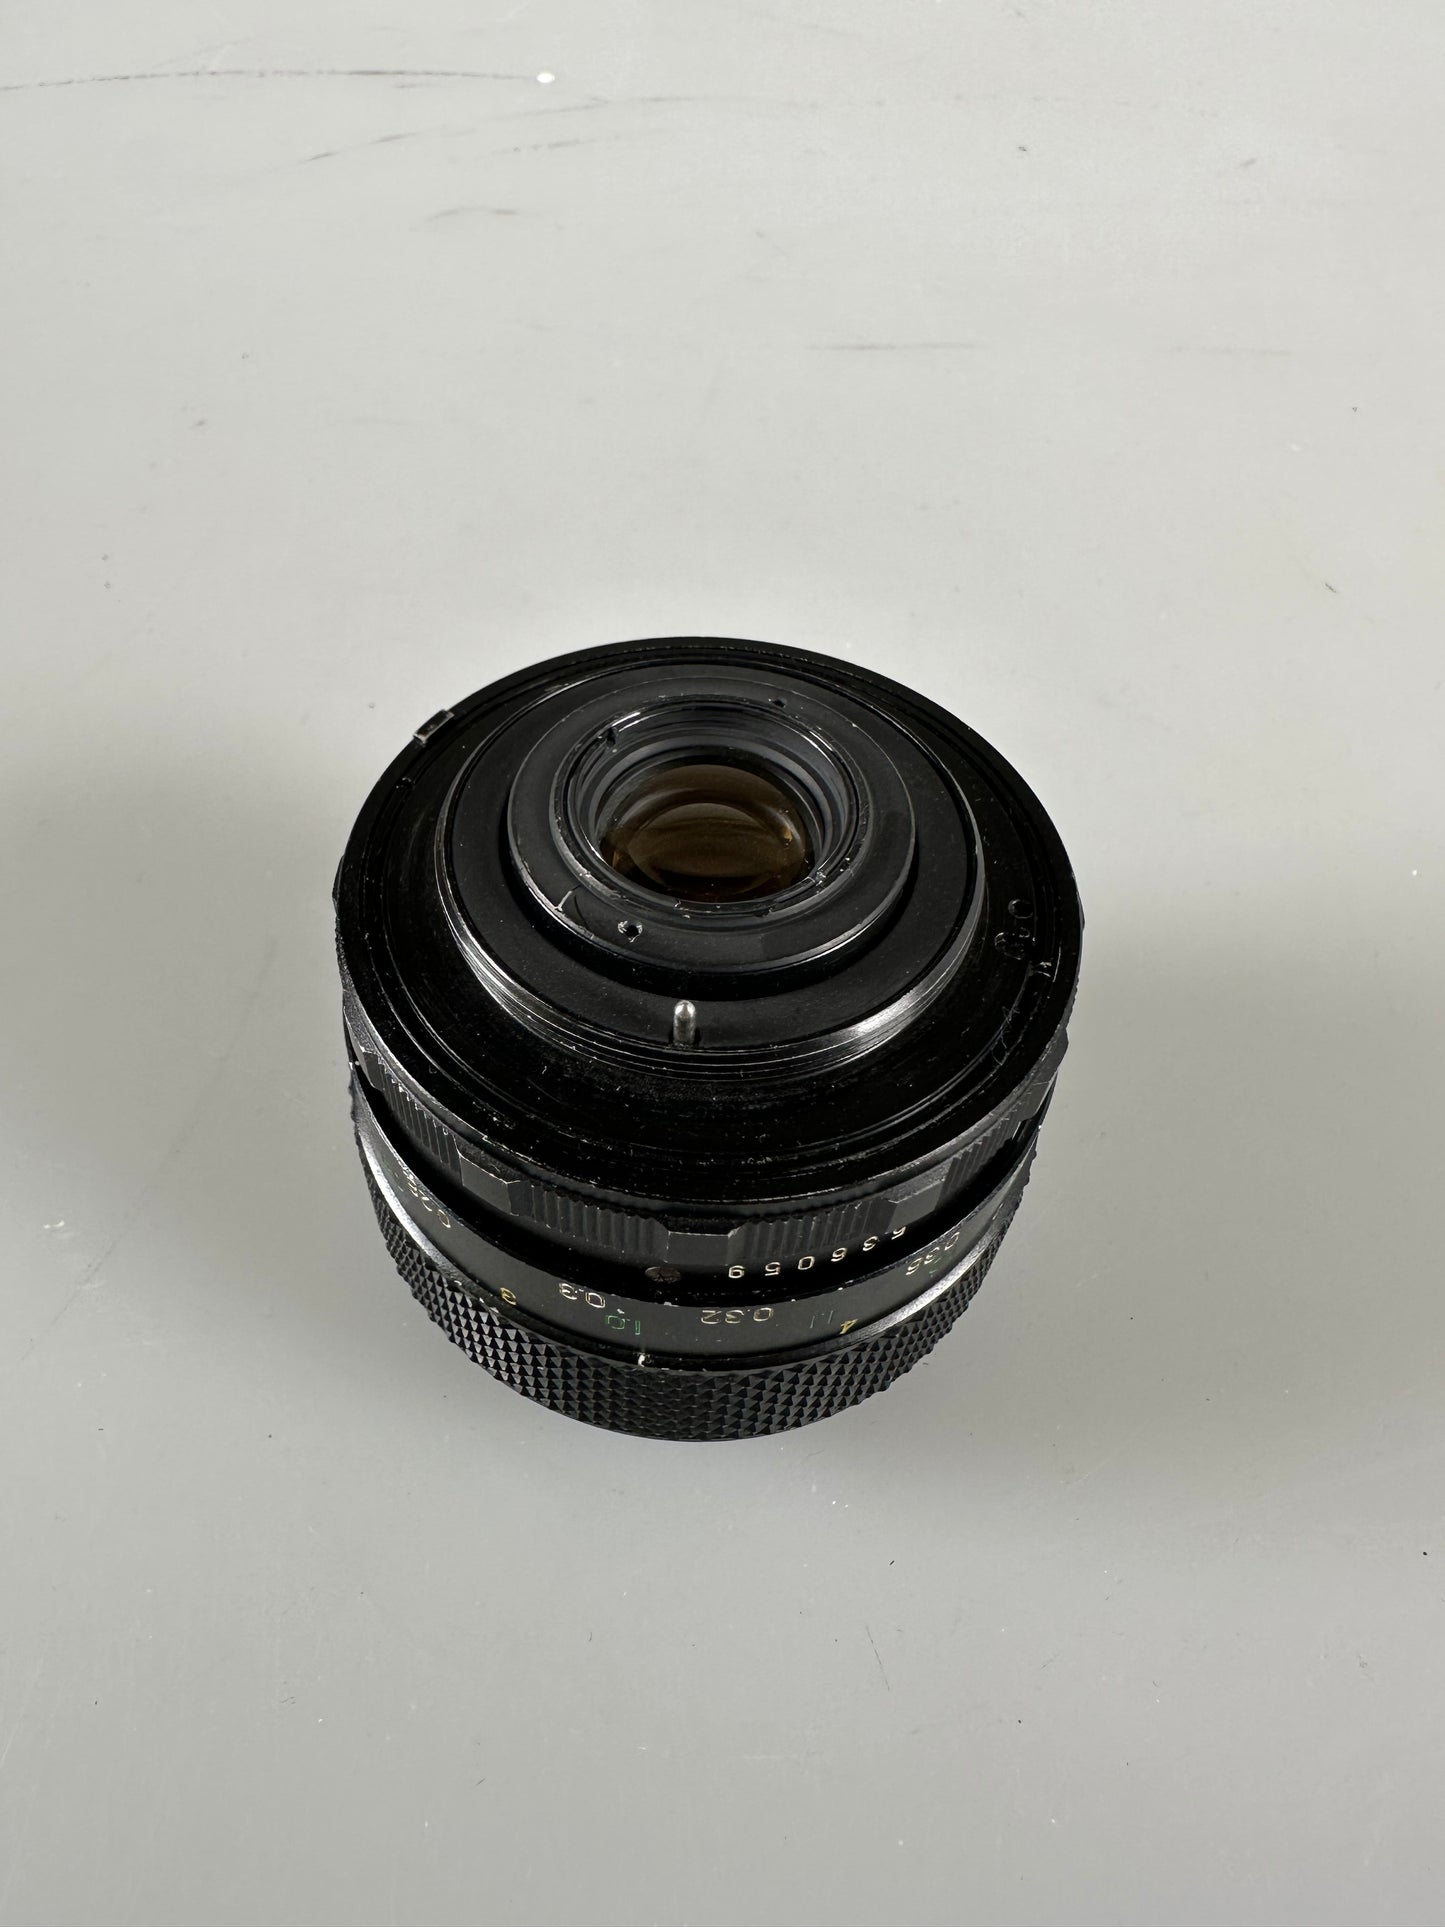 Fuji EBC Fujinon Macro 55mm f3.5 M42 Mount Lens